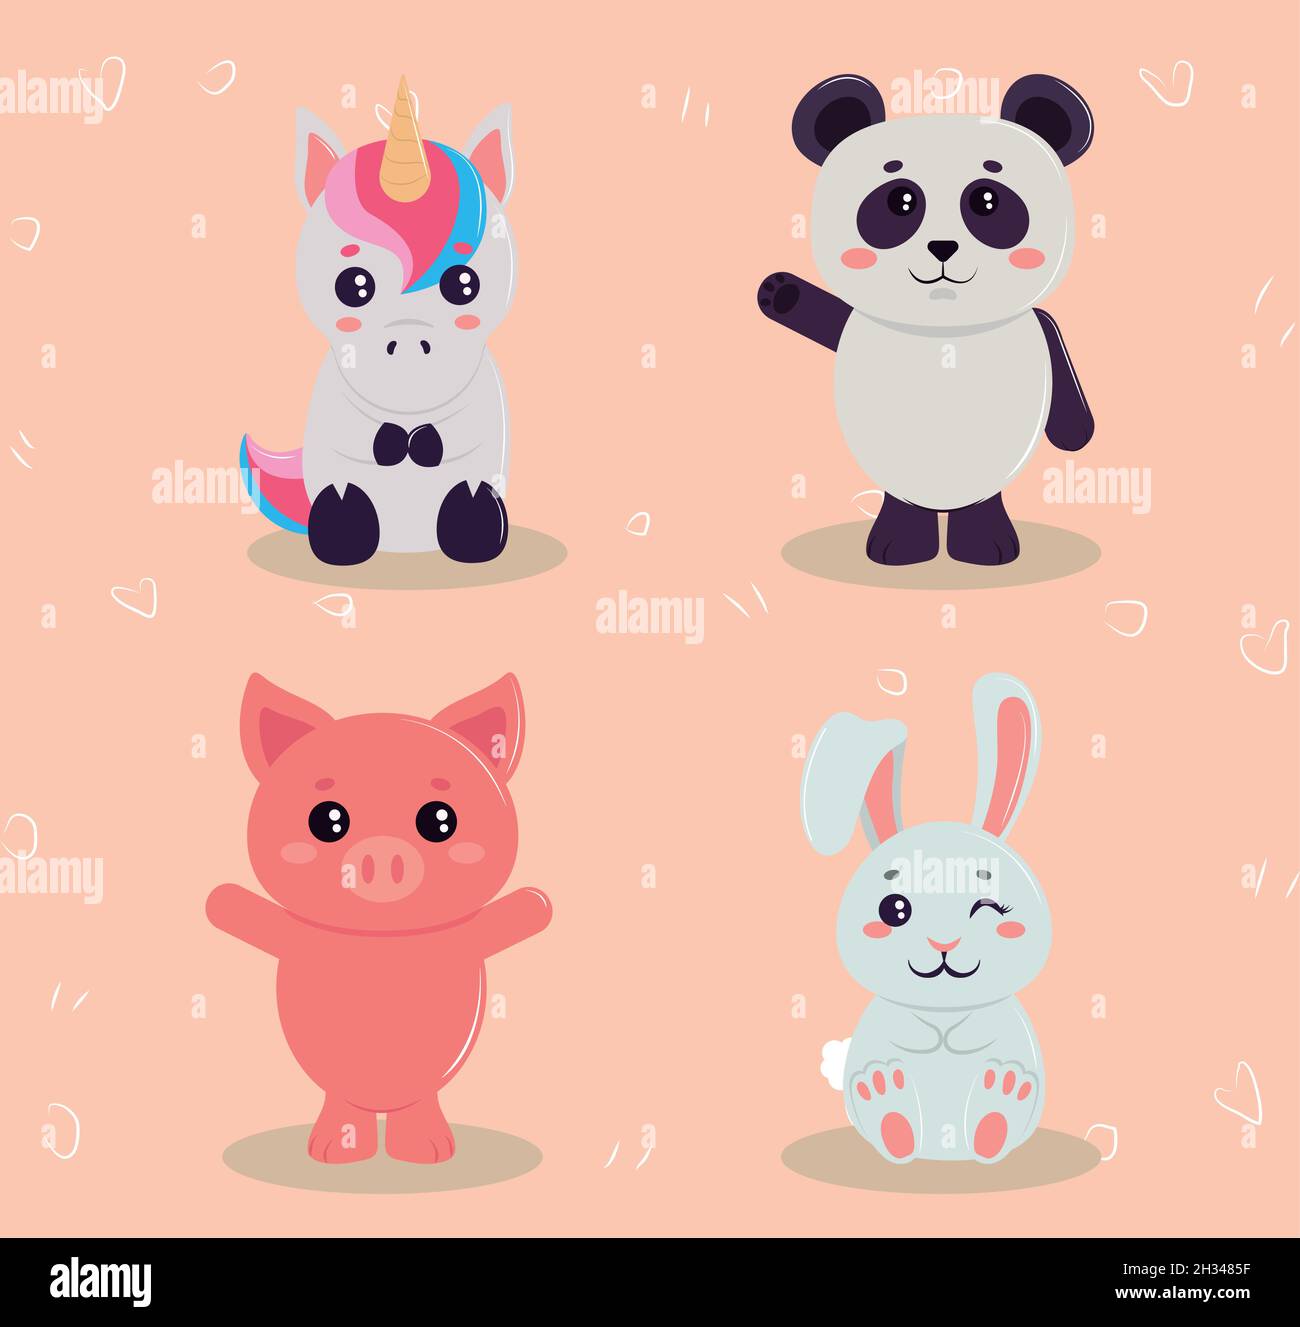 dibujos animados de animales kawaii Imagen Vector de stock - Alamy